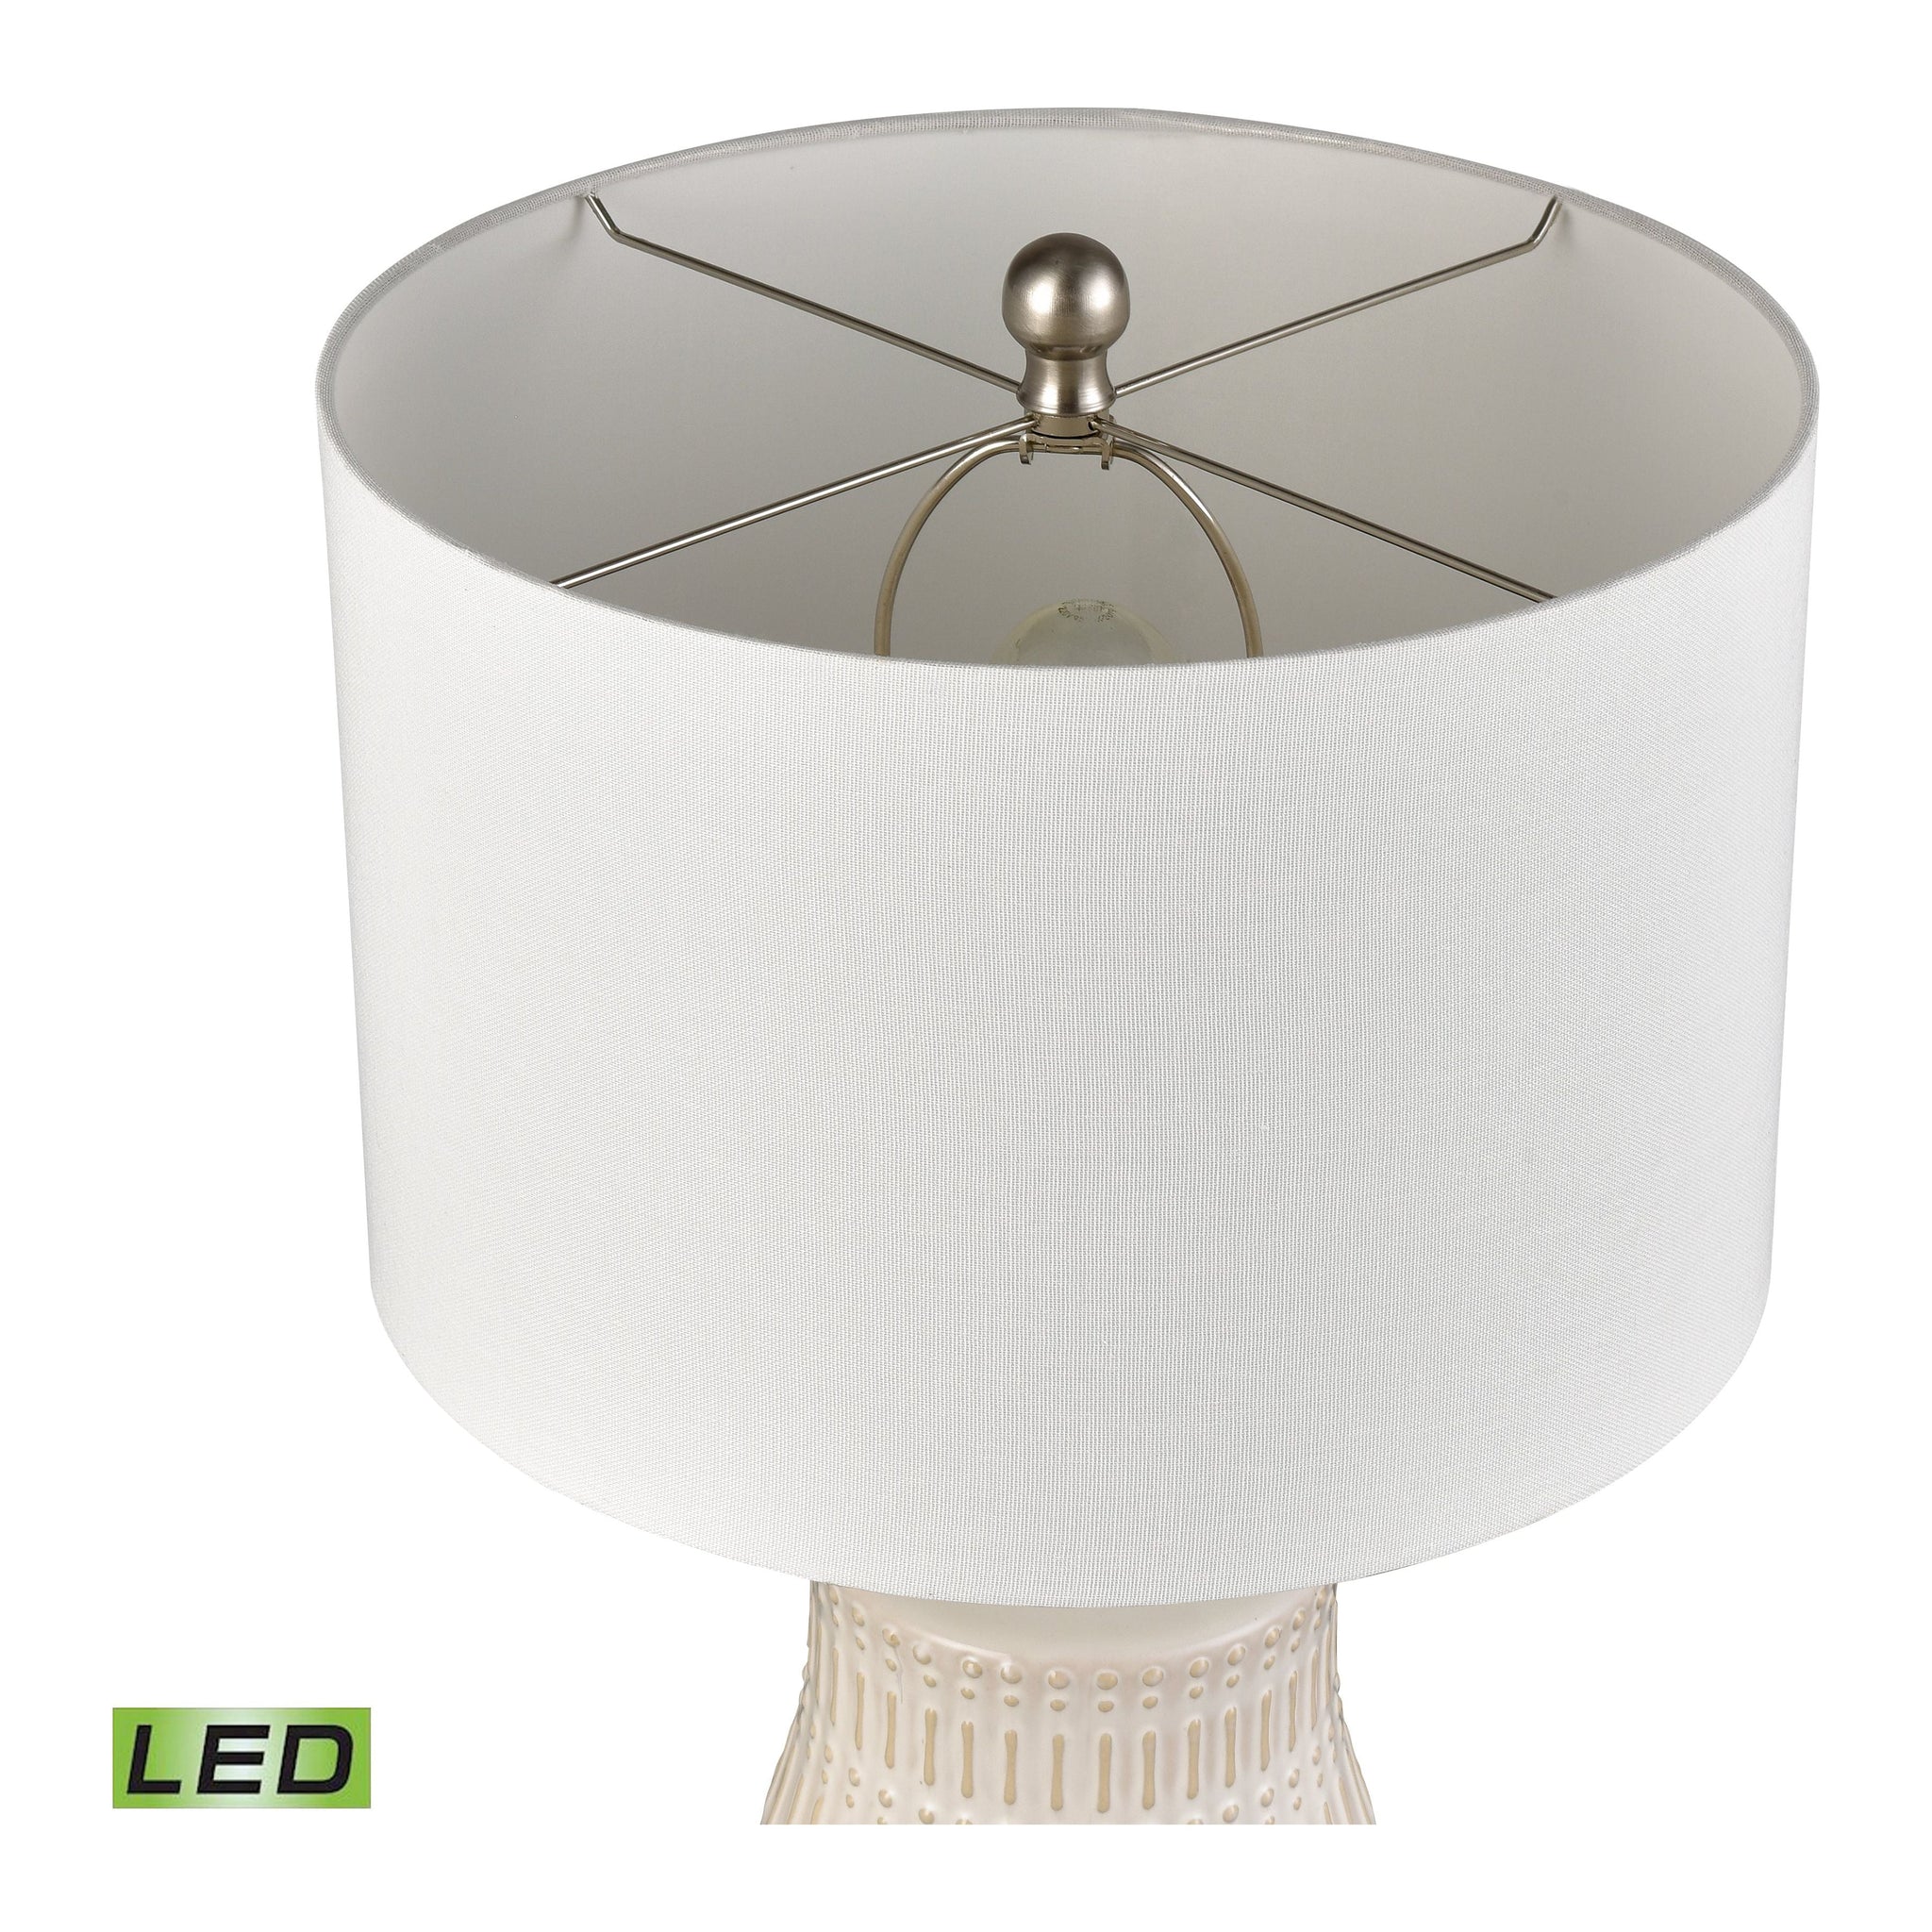 Dorin 25.5" High 1-Light Table Lamp